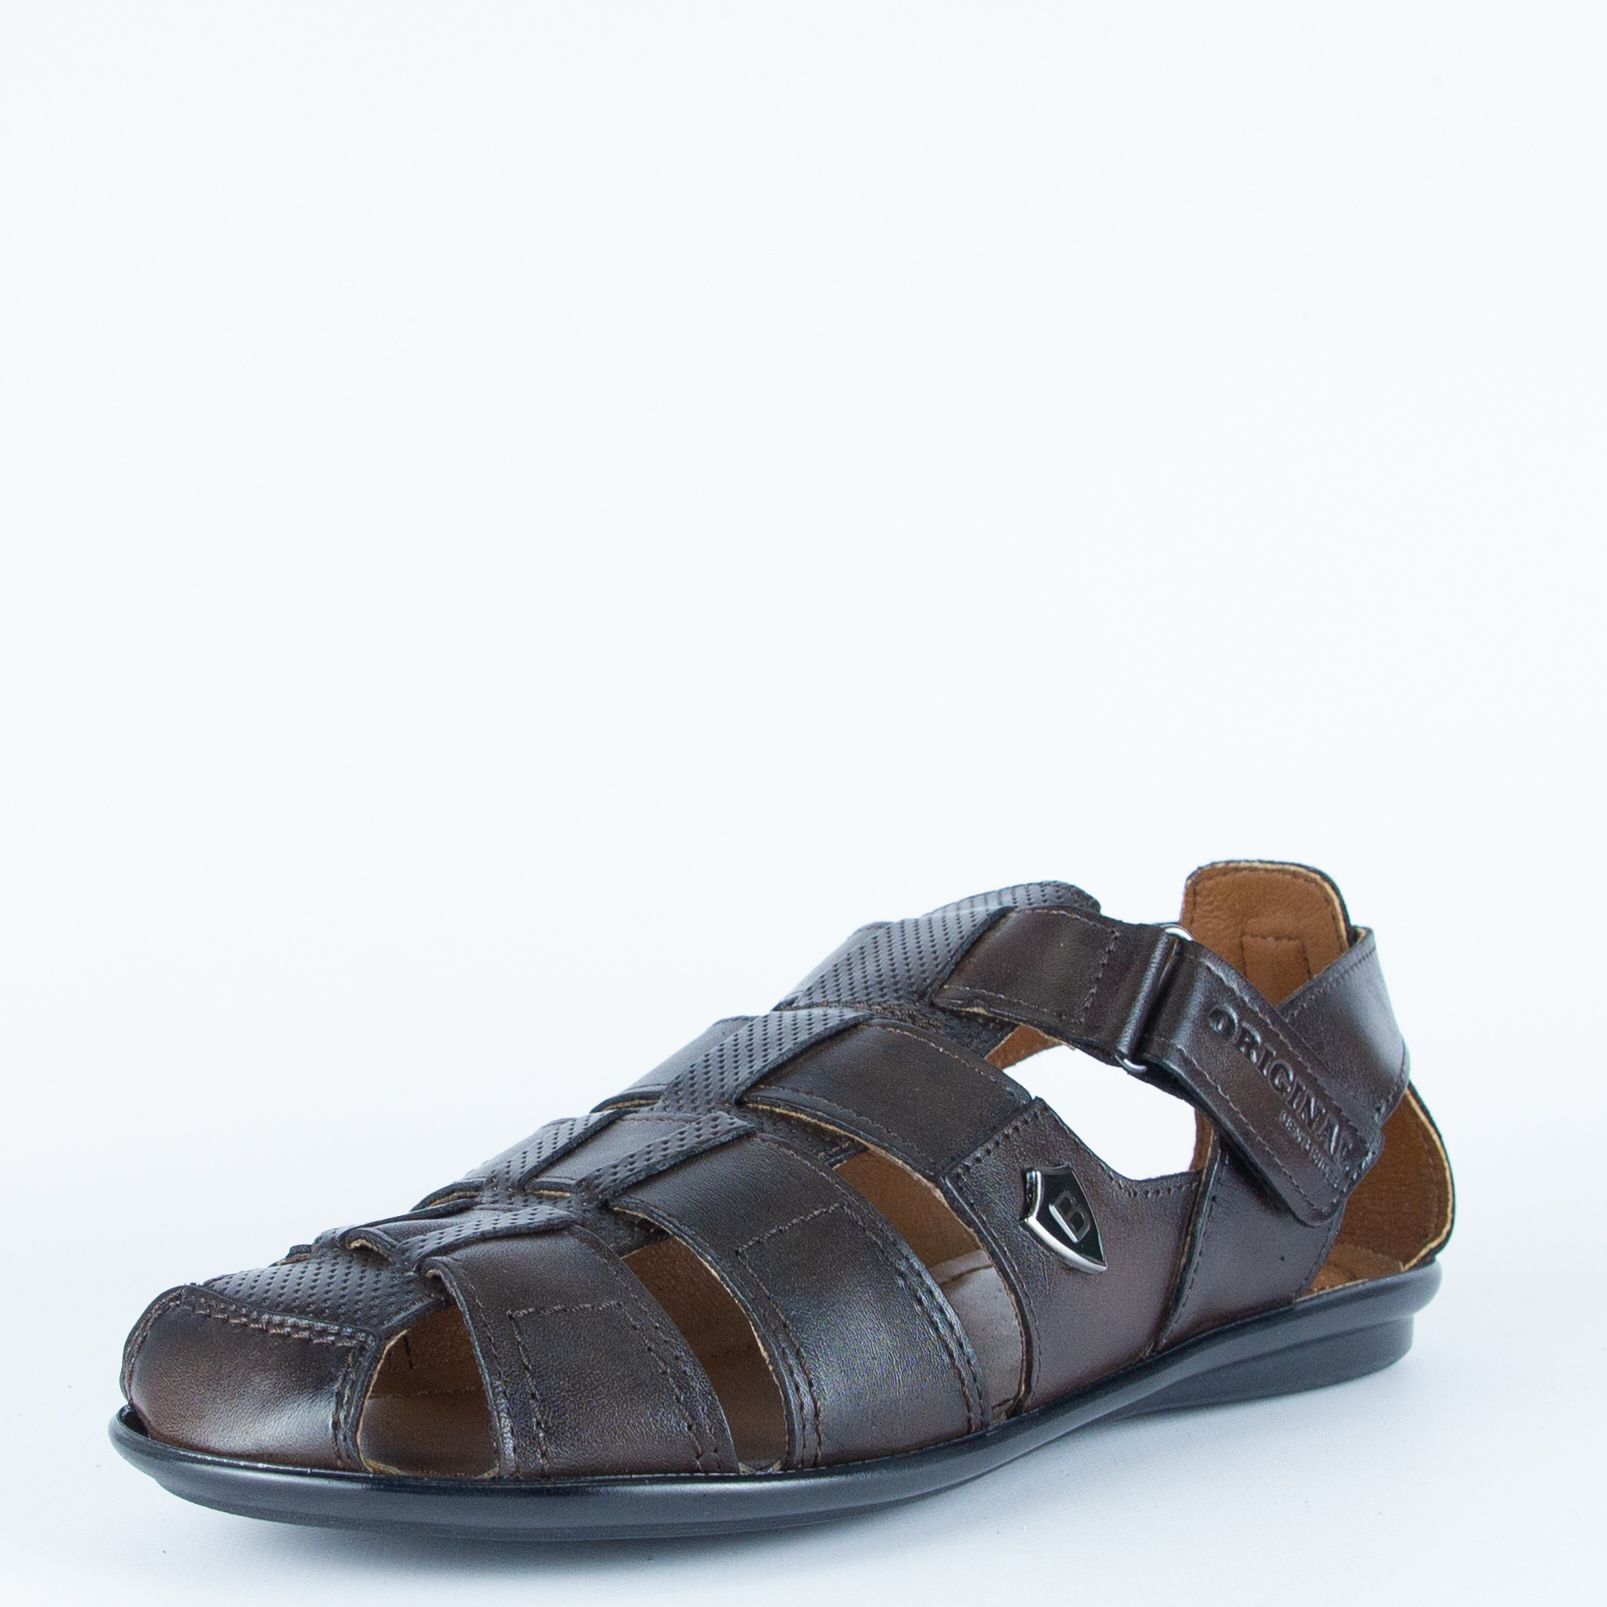 Сандалии мужские Comfort Shoes Сан-2/2 коричневые 43 RU